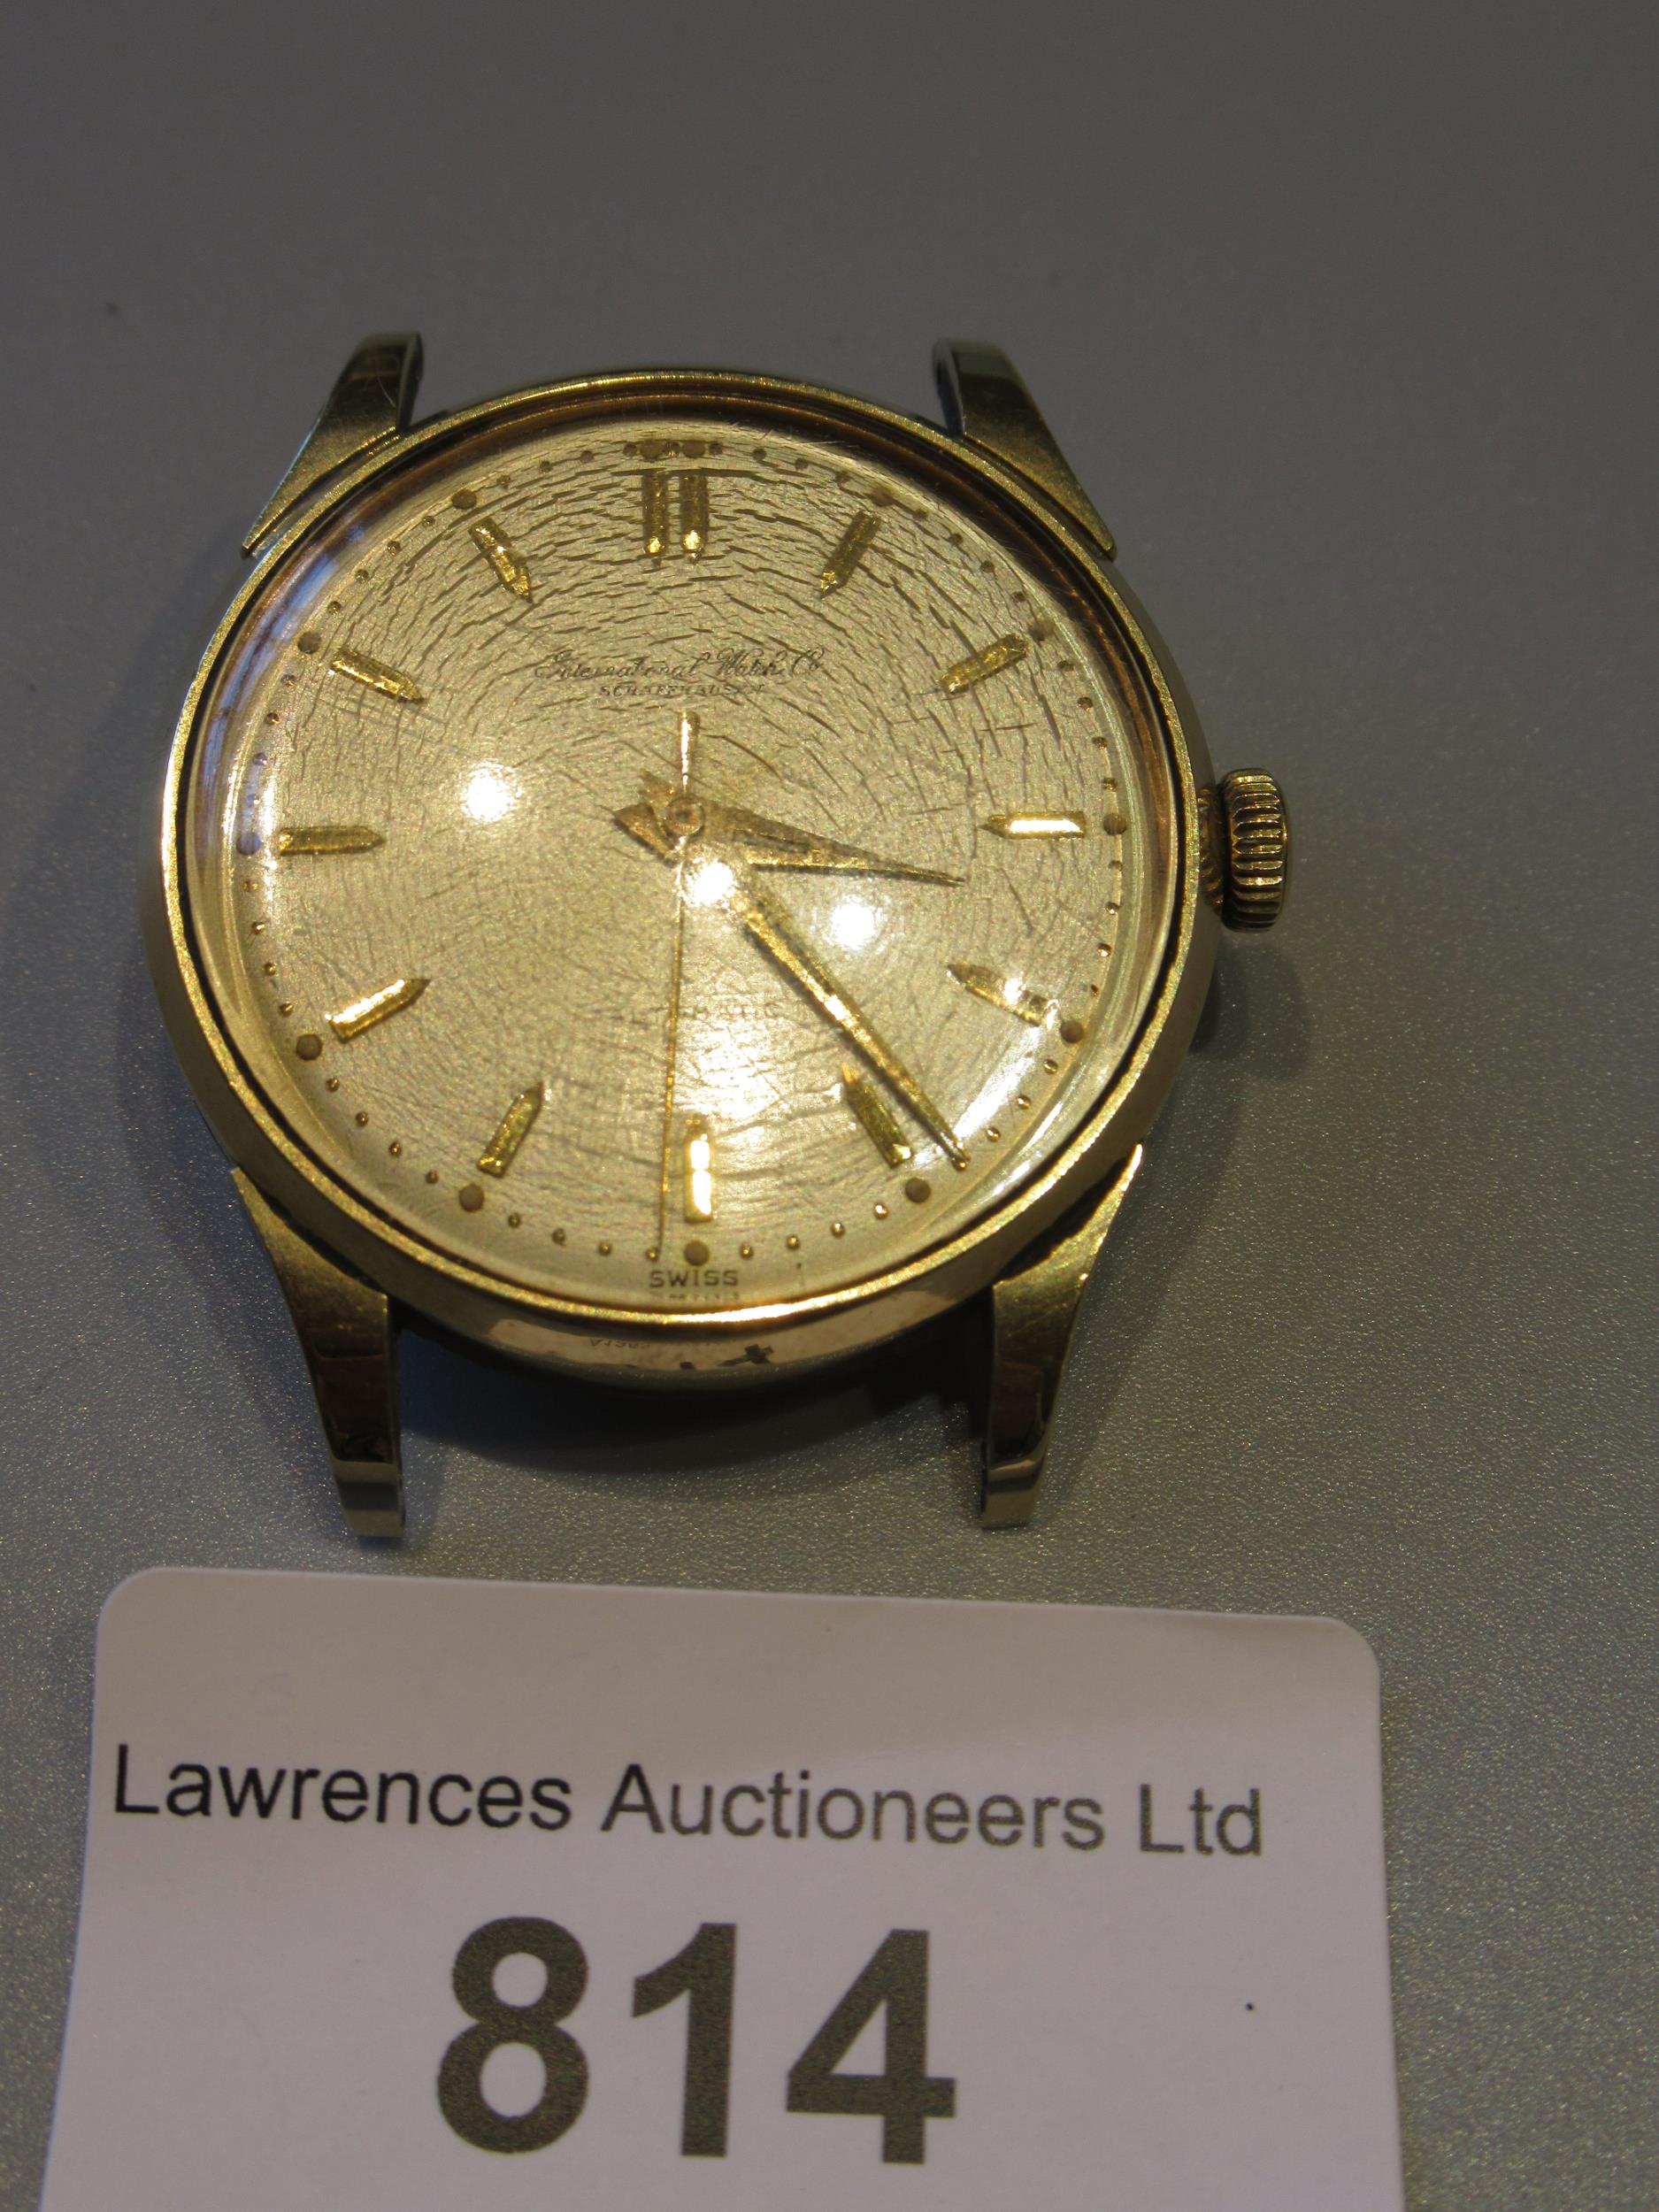 International Watch Company Schaffhausen, gentleman's gold plated automatic wrist watch, the 31mm